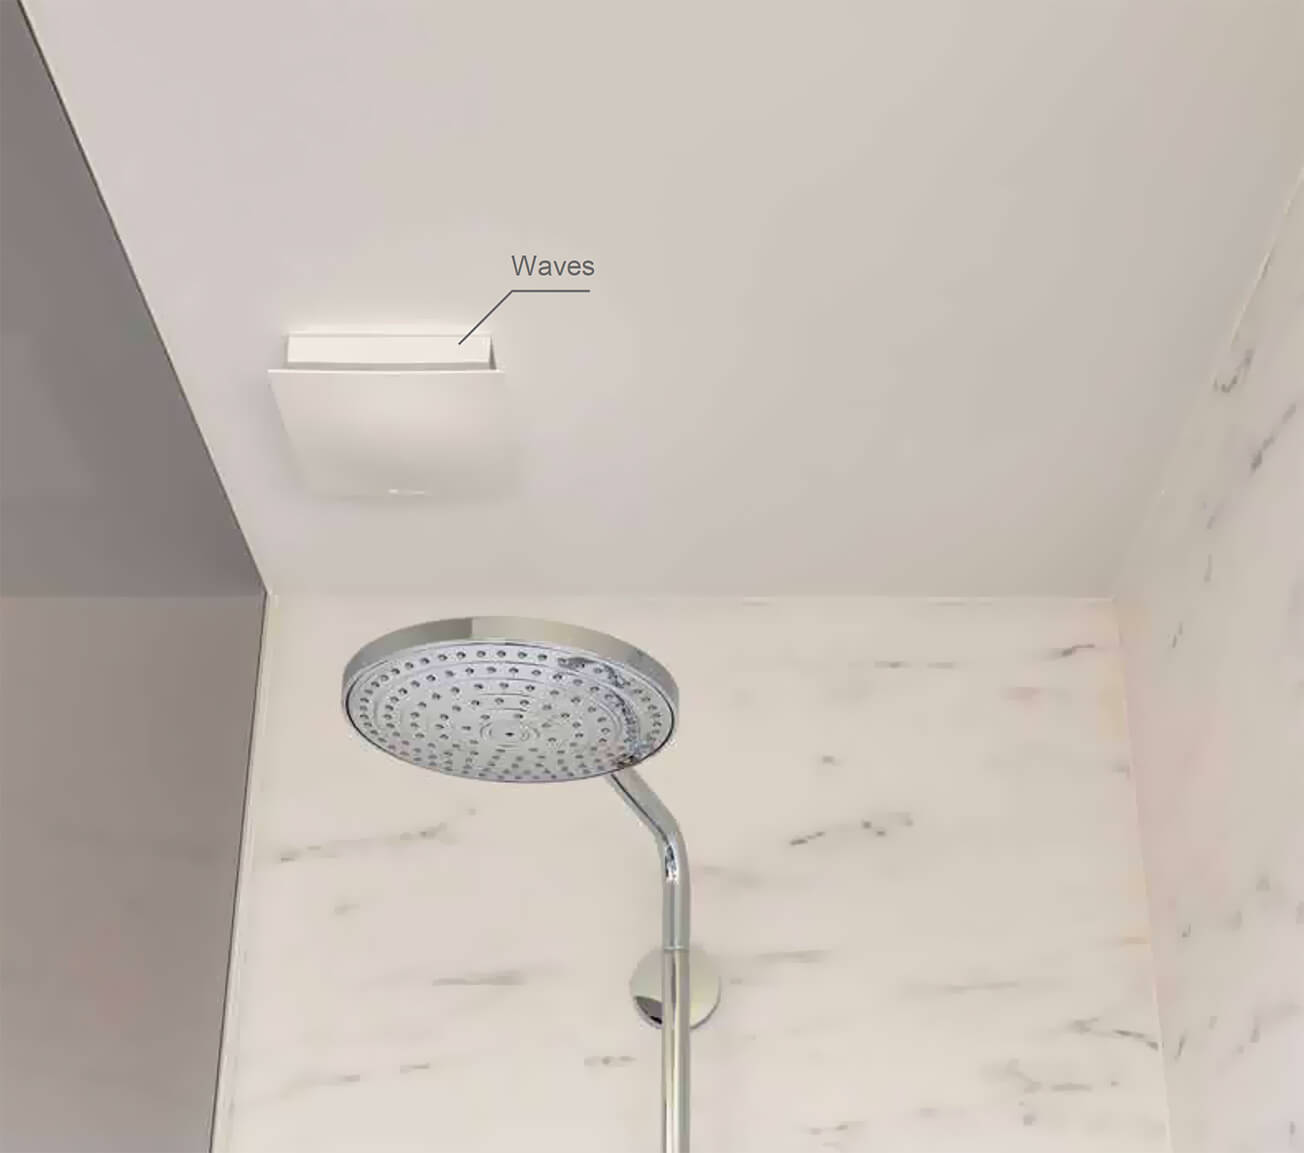 Renson Waves VOC RH SMART ventilator in bathroom / shower